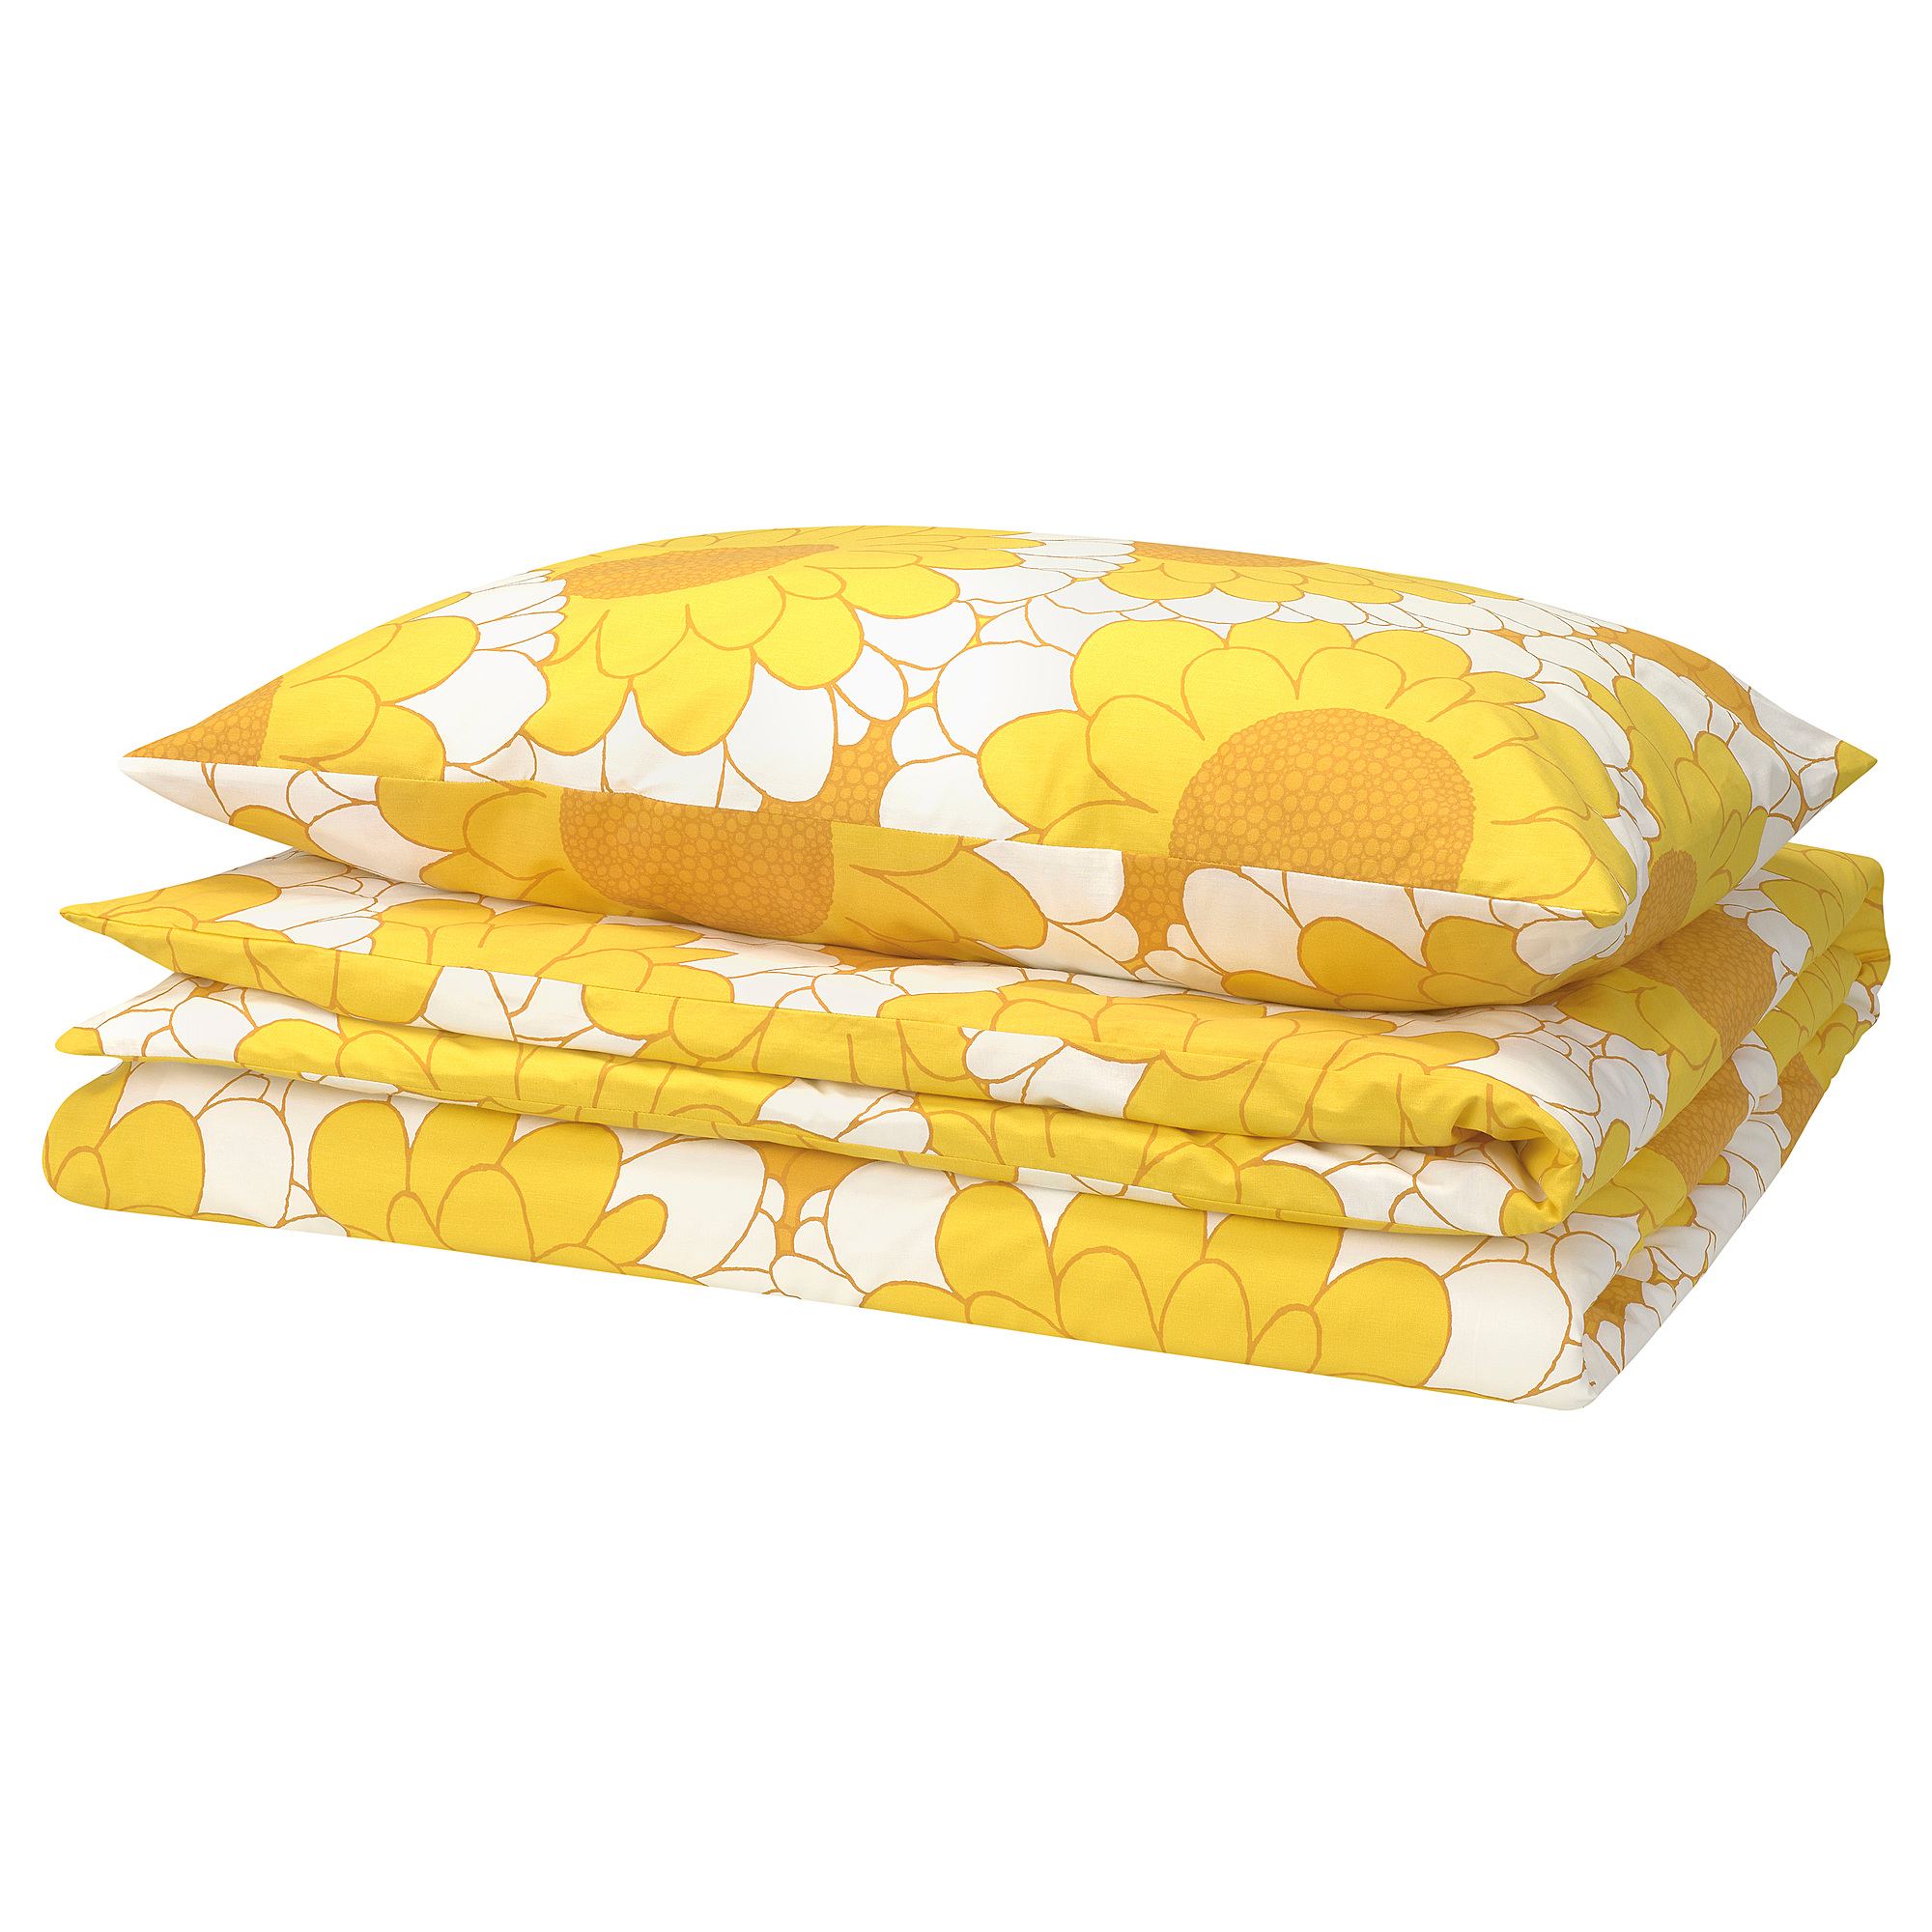 KRANSMALVA duvet cover and pillowcase